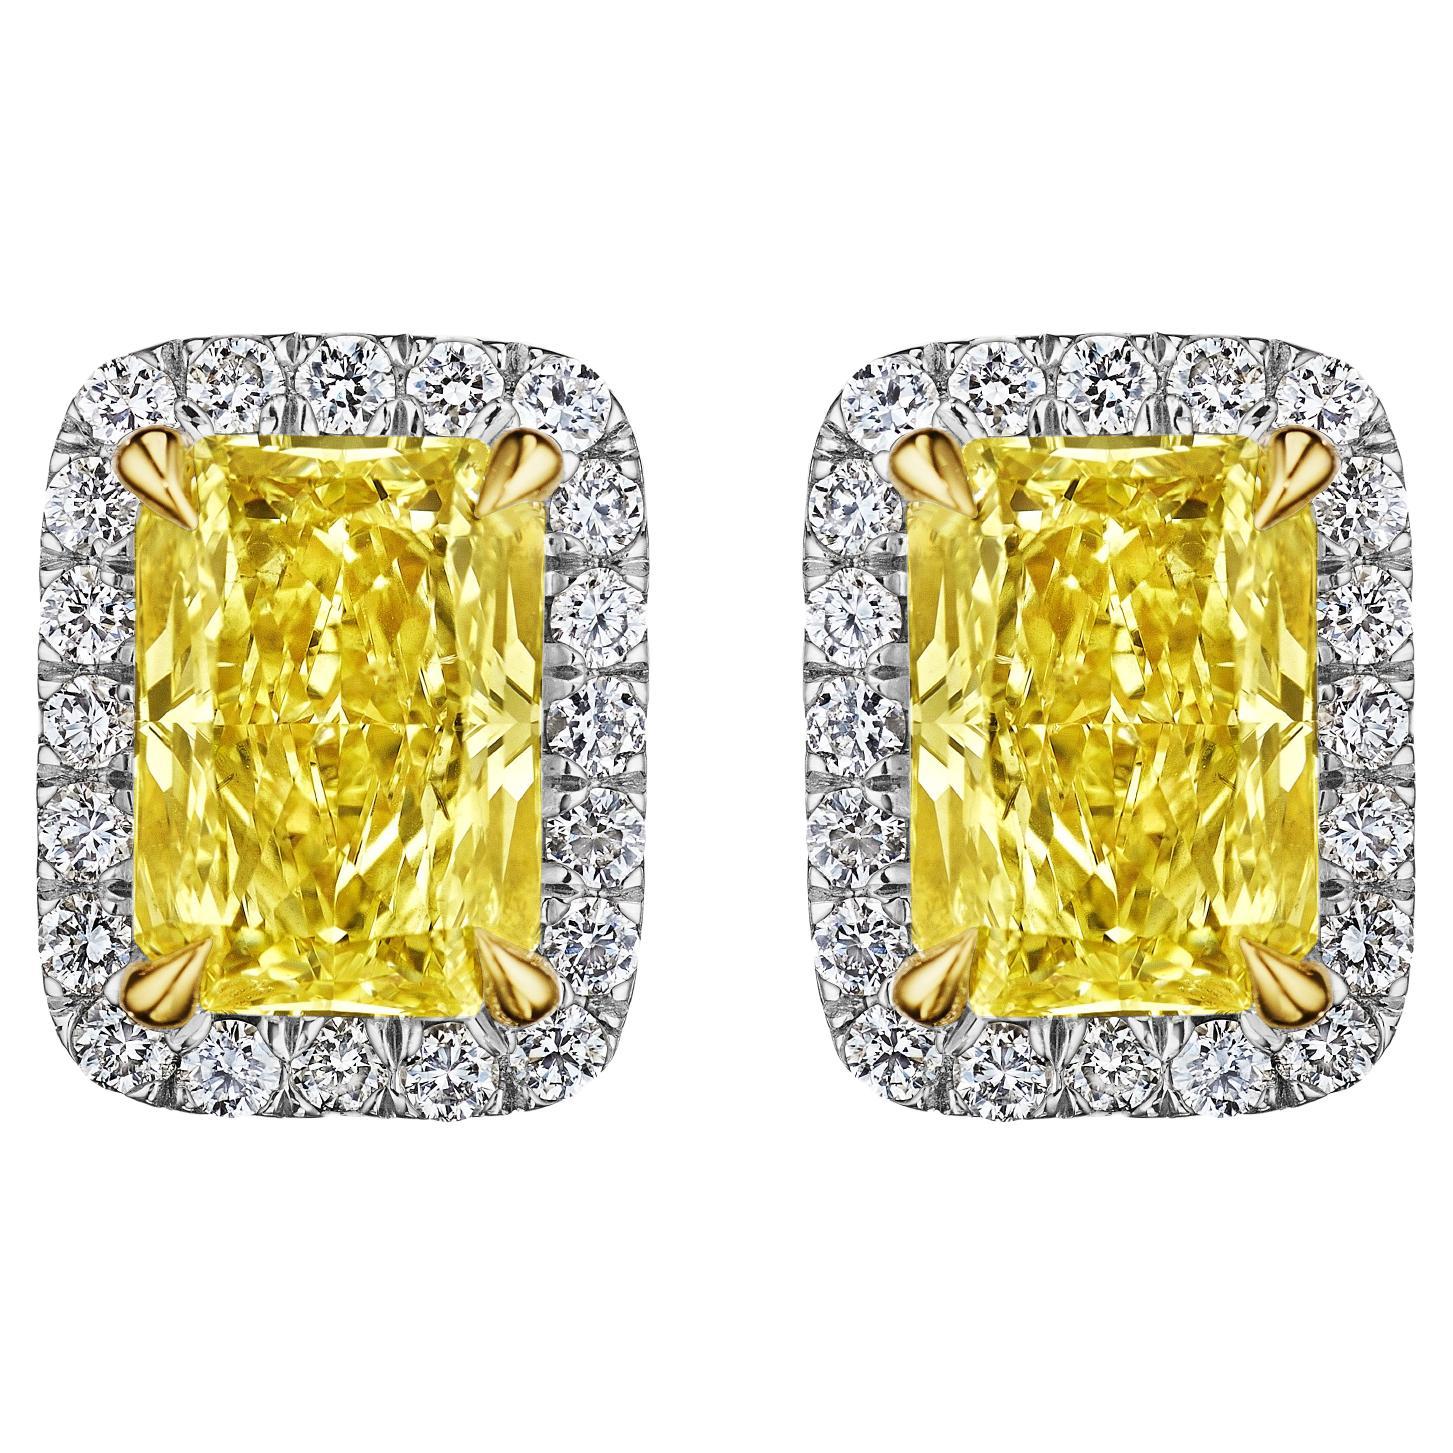 2.83ct GIA Certified Fancy Yellow Radiant Diamond Halo Earrings in 18KT Gold For Sale